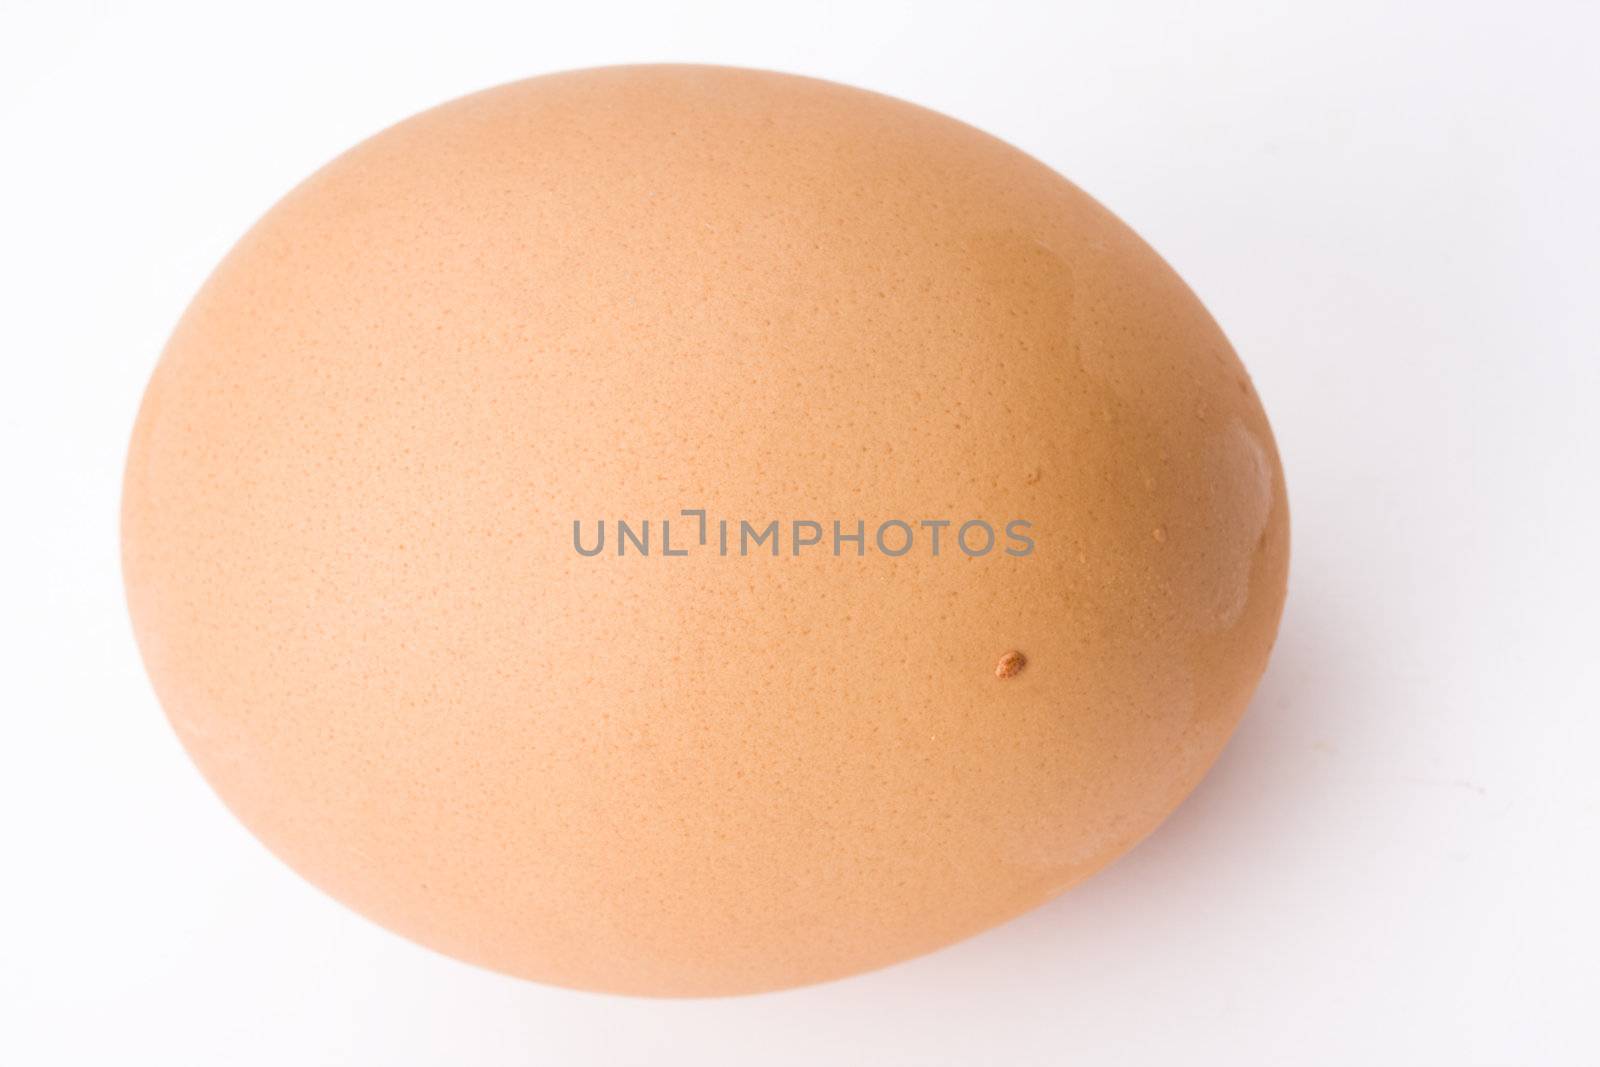 single beige egg on a white background